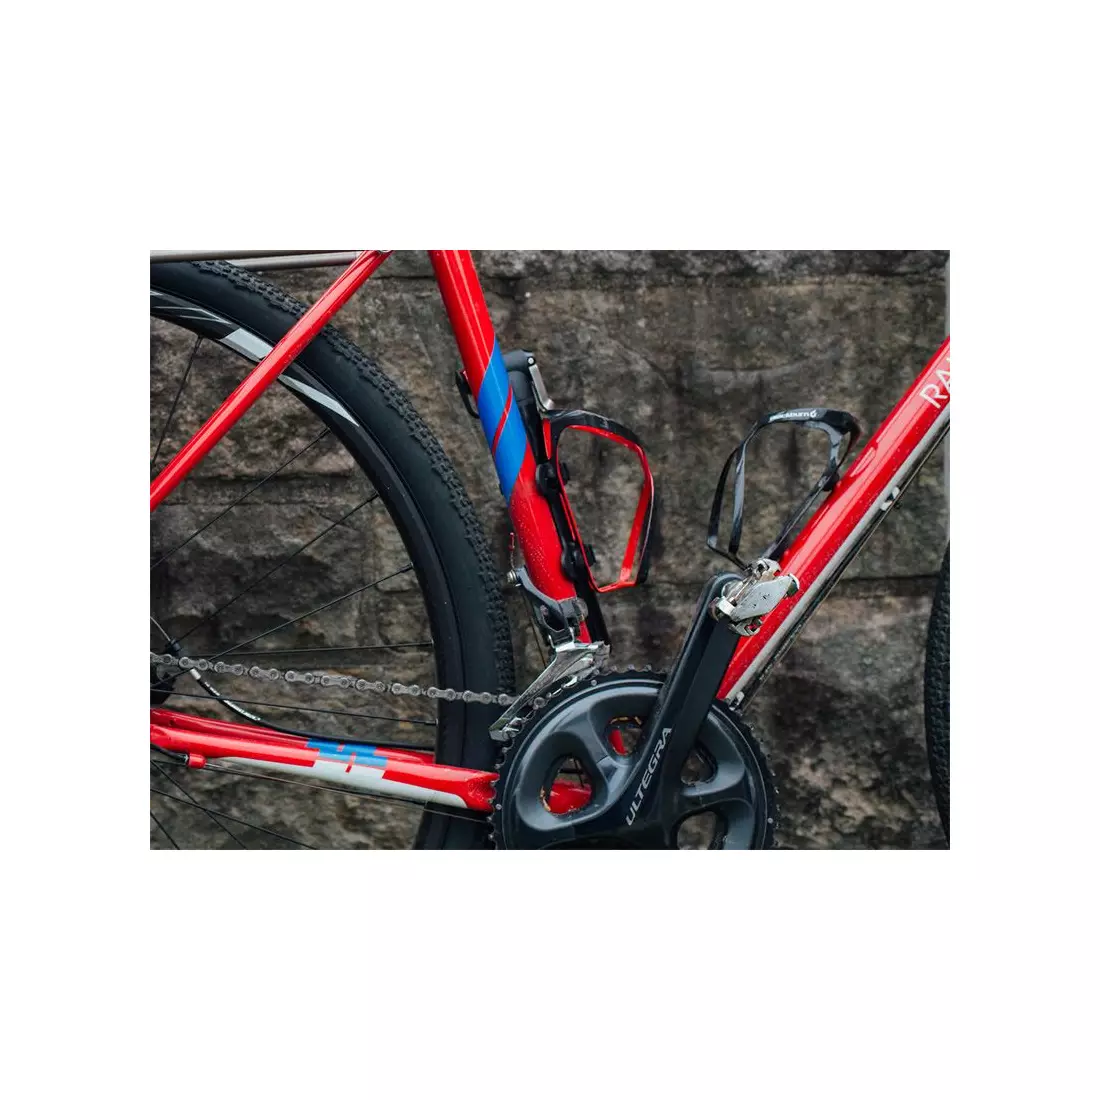 BLACKBURN Carboniferous bicycle basket cinch 16g black red matte BBN-7068173